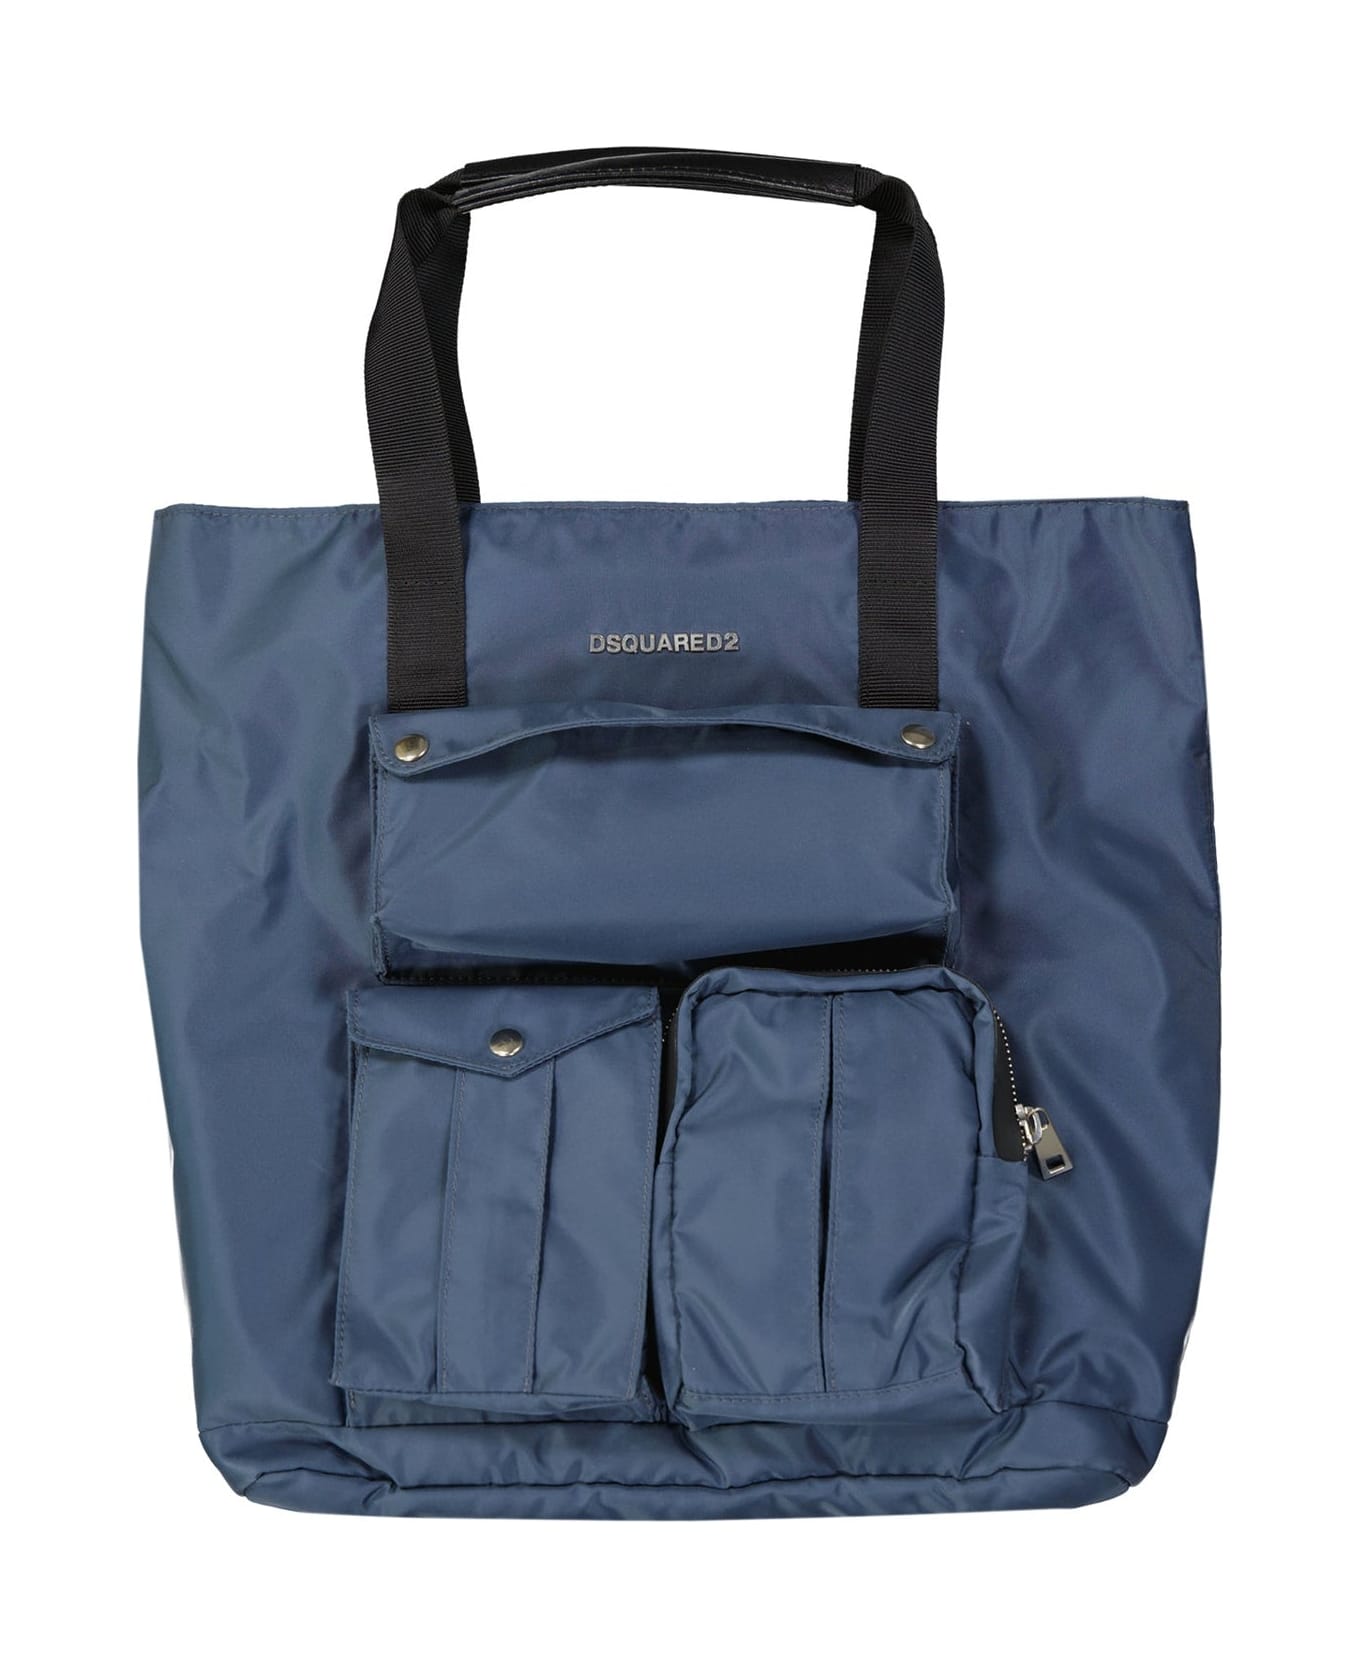 Dsquared2 Fabric Bag - Blue